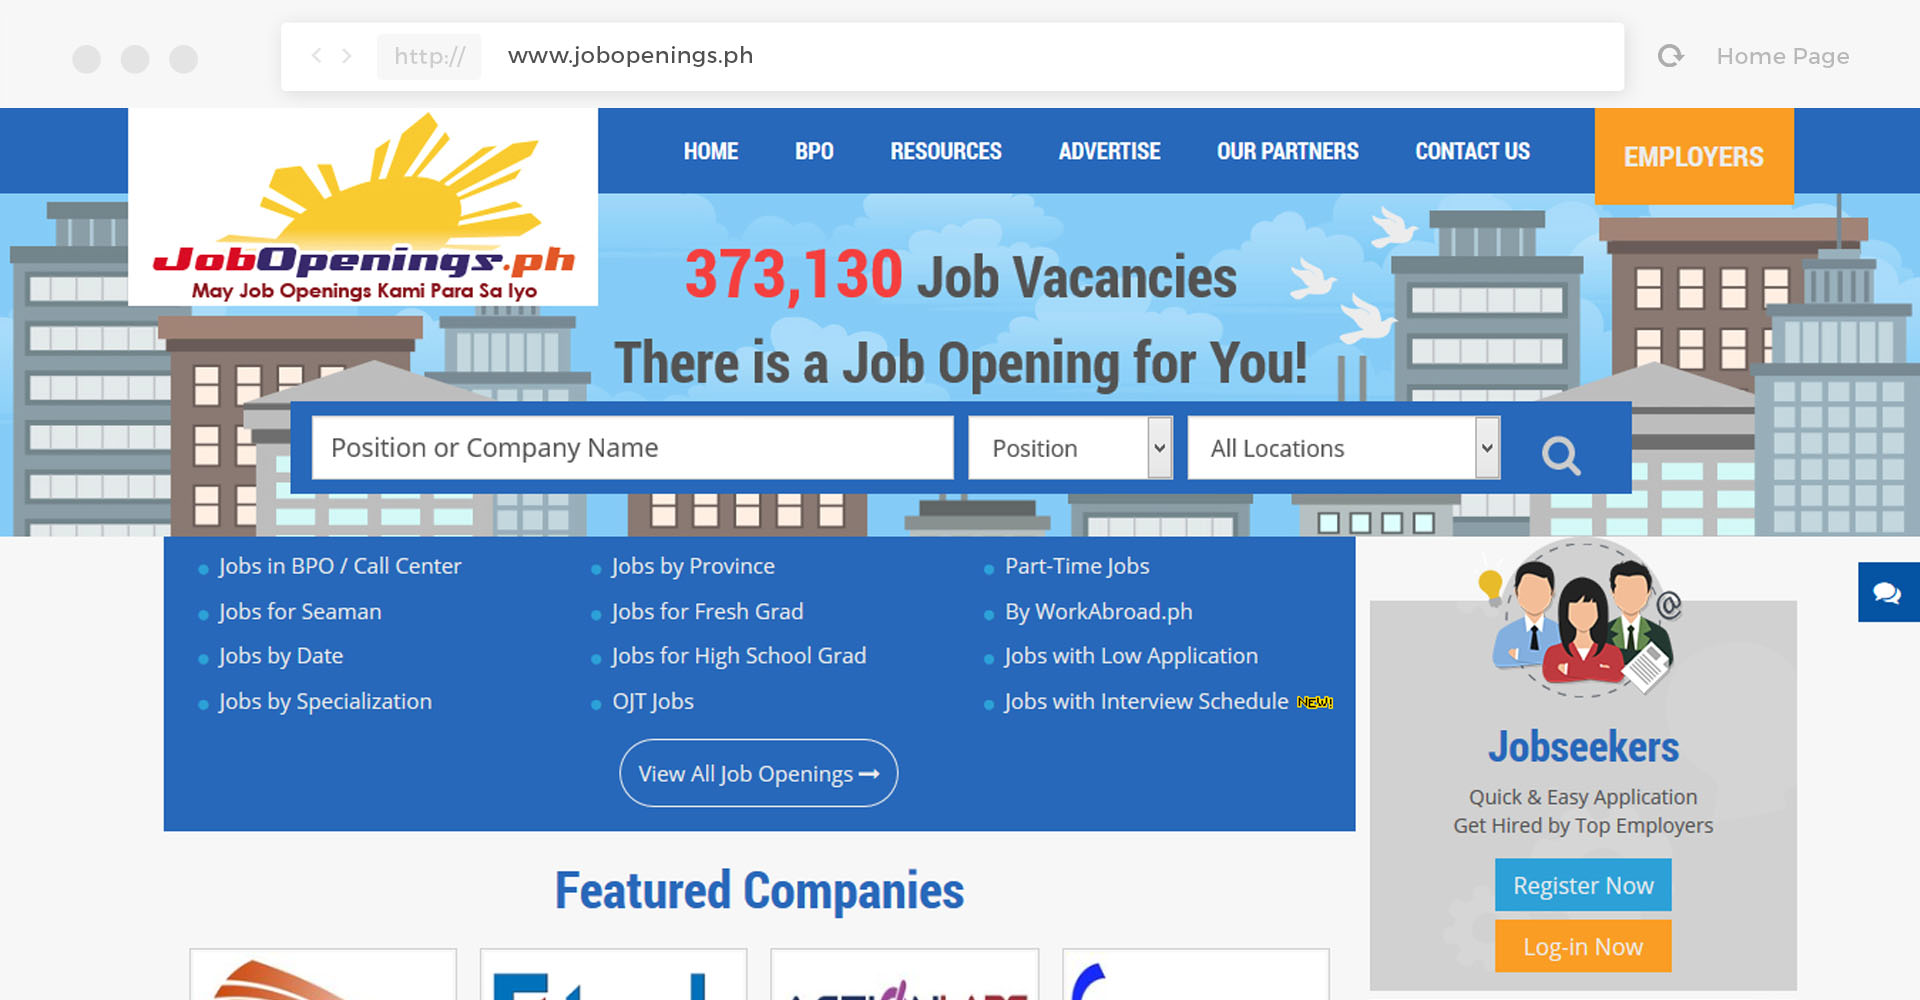 Jobopenings.ph